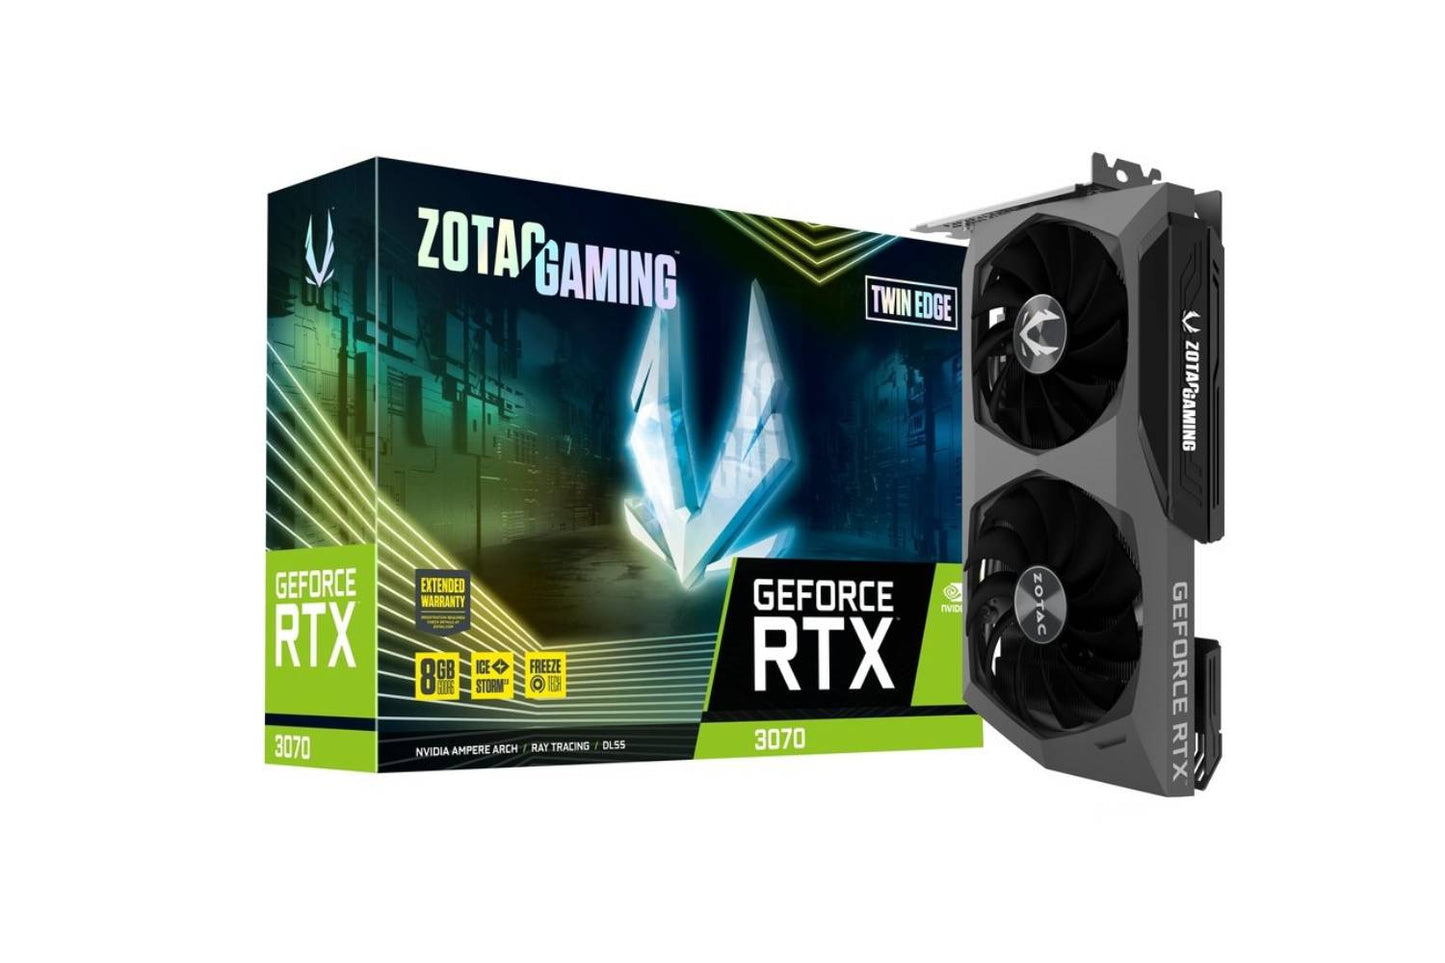 ZOTAC GAMING GeForce RTX 3070 Twin Edge OC Graphics card.